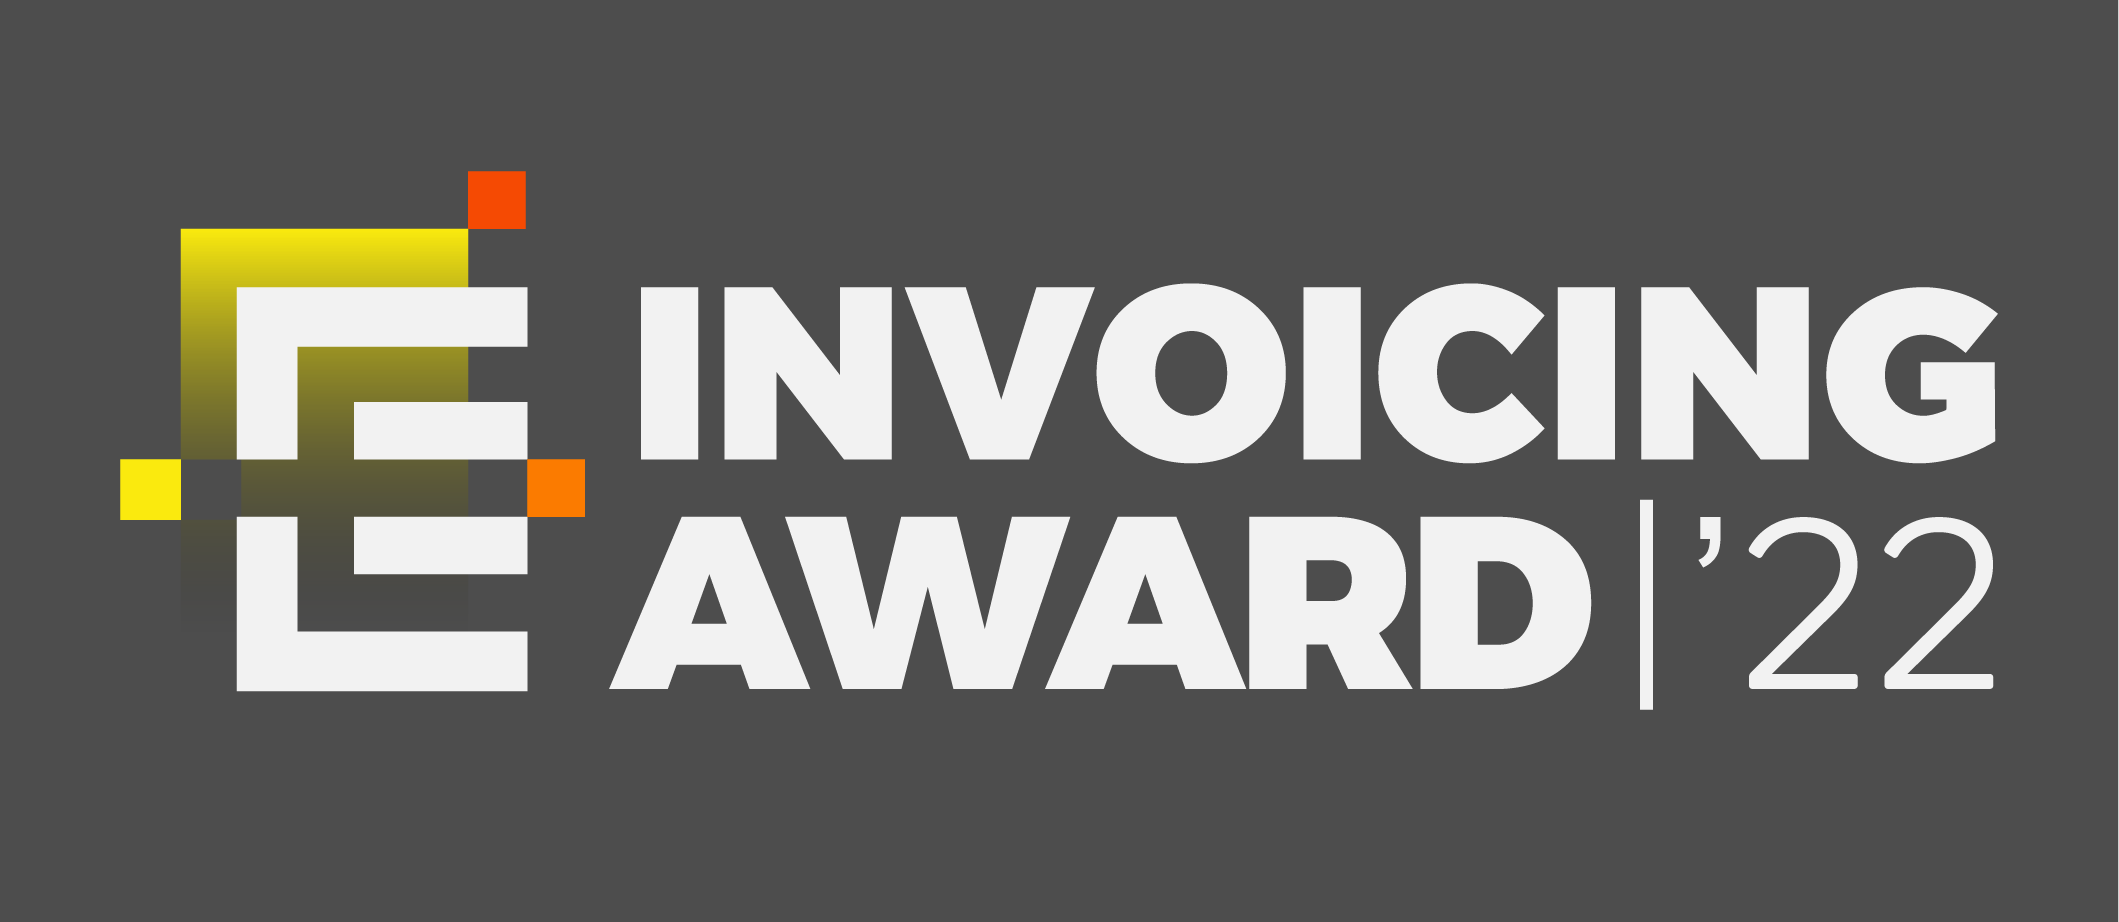 E-invoicing award 2022